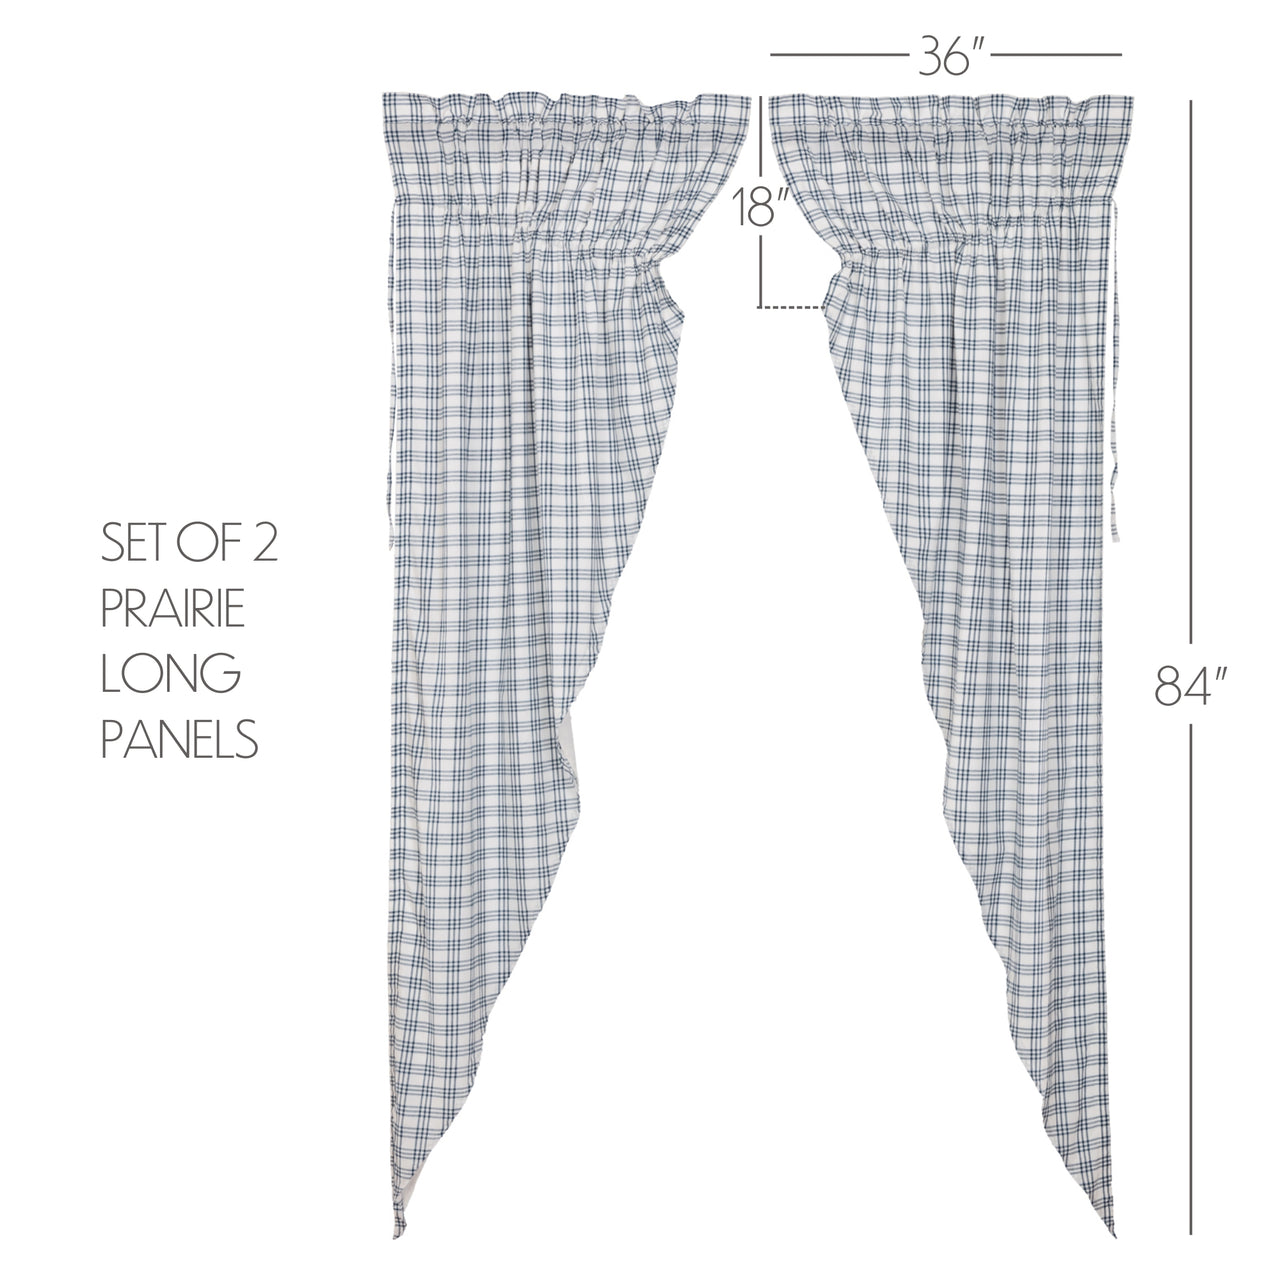 Sawyer Mill Blue Plaid Prairie Long Panel Curtain Set of 2